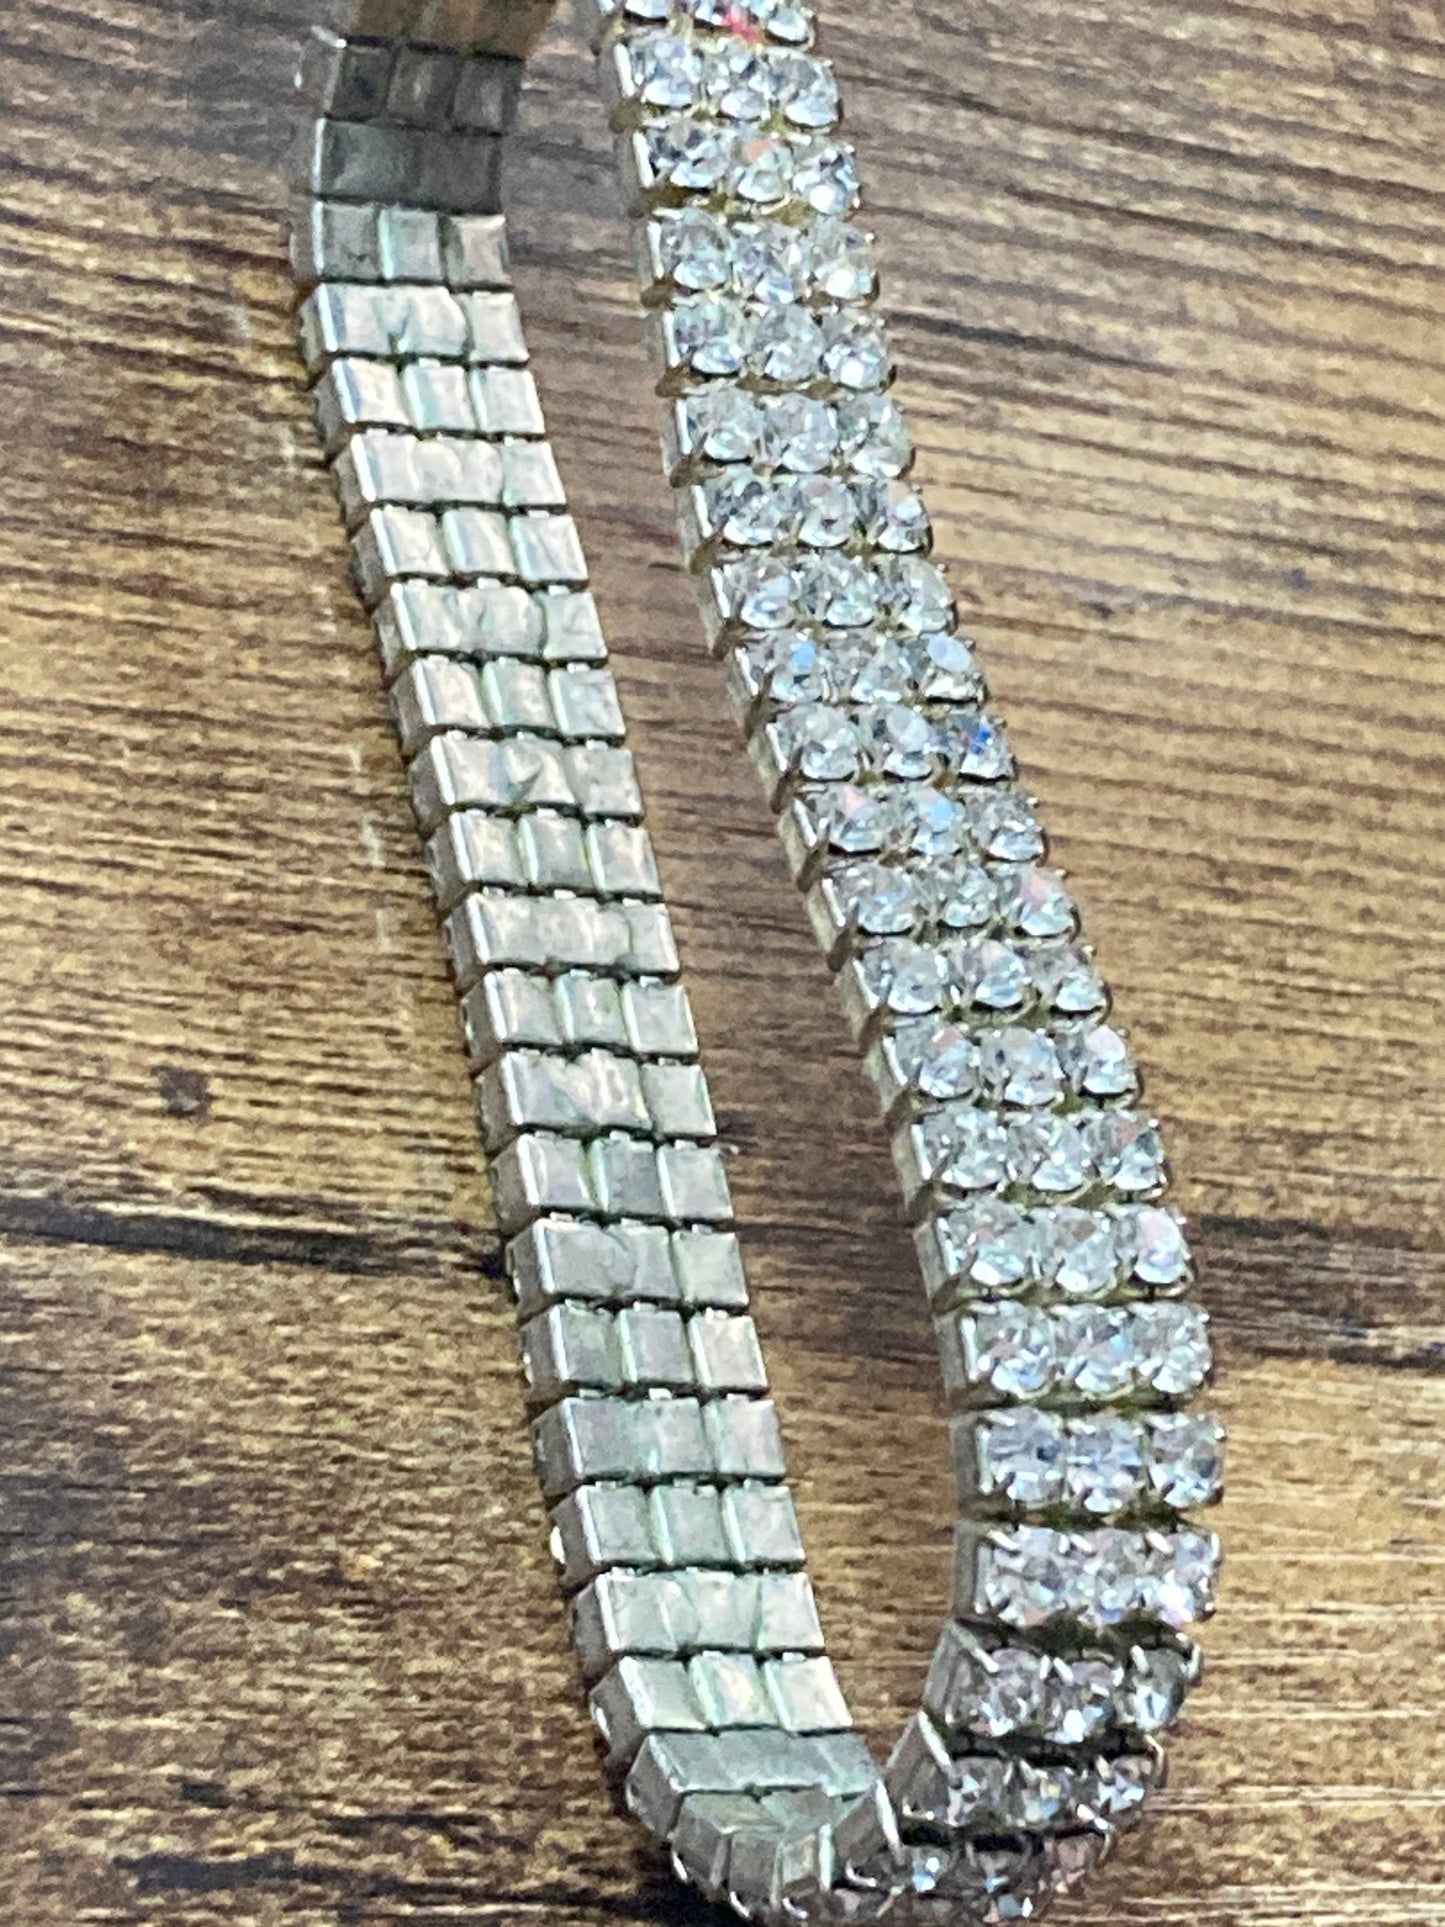 Chrome Back Paste Rhinestone diamanté stretch Bracelet